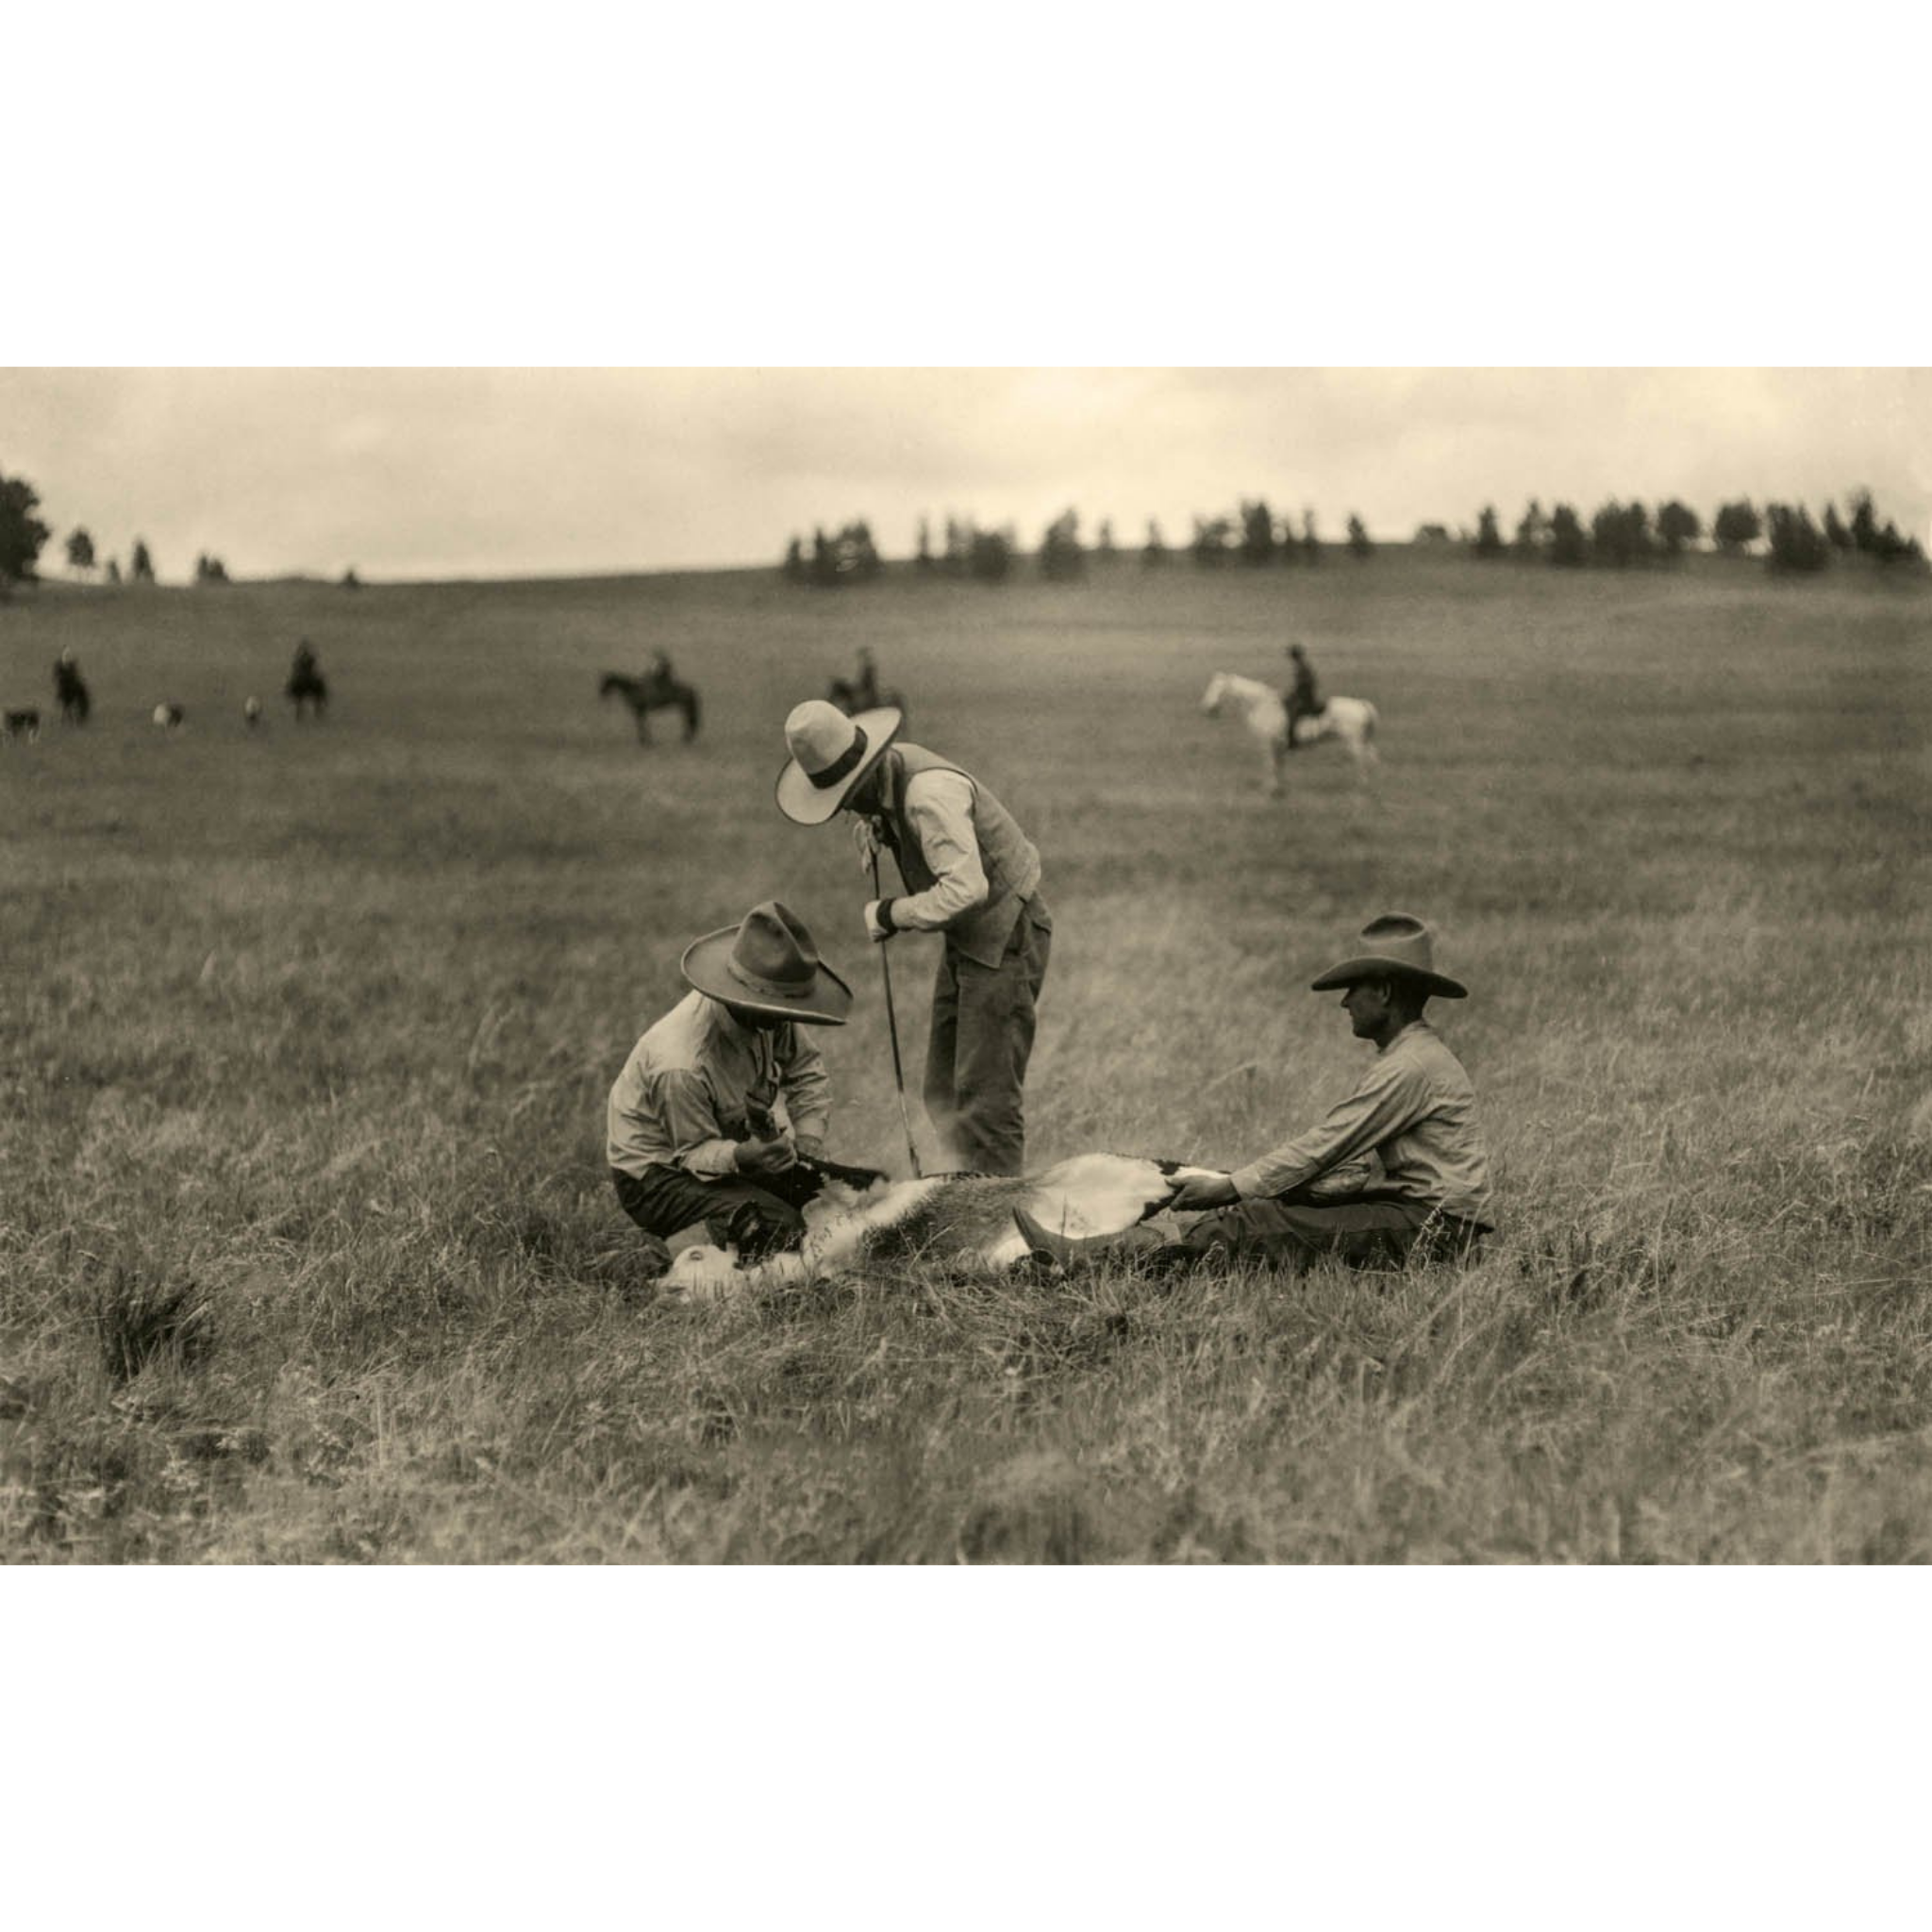 Bones Ranch: Branding Cattle on the Range - ca. 1930 Photograph